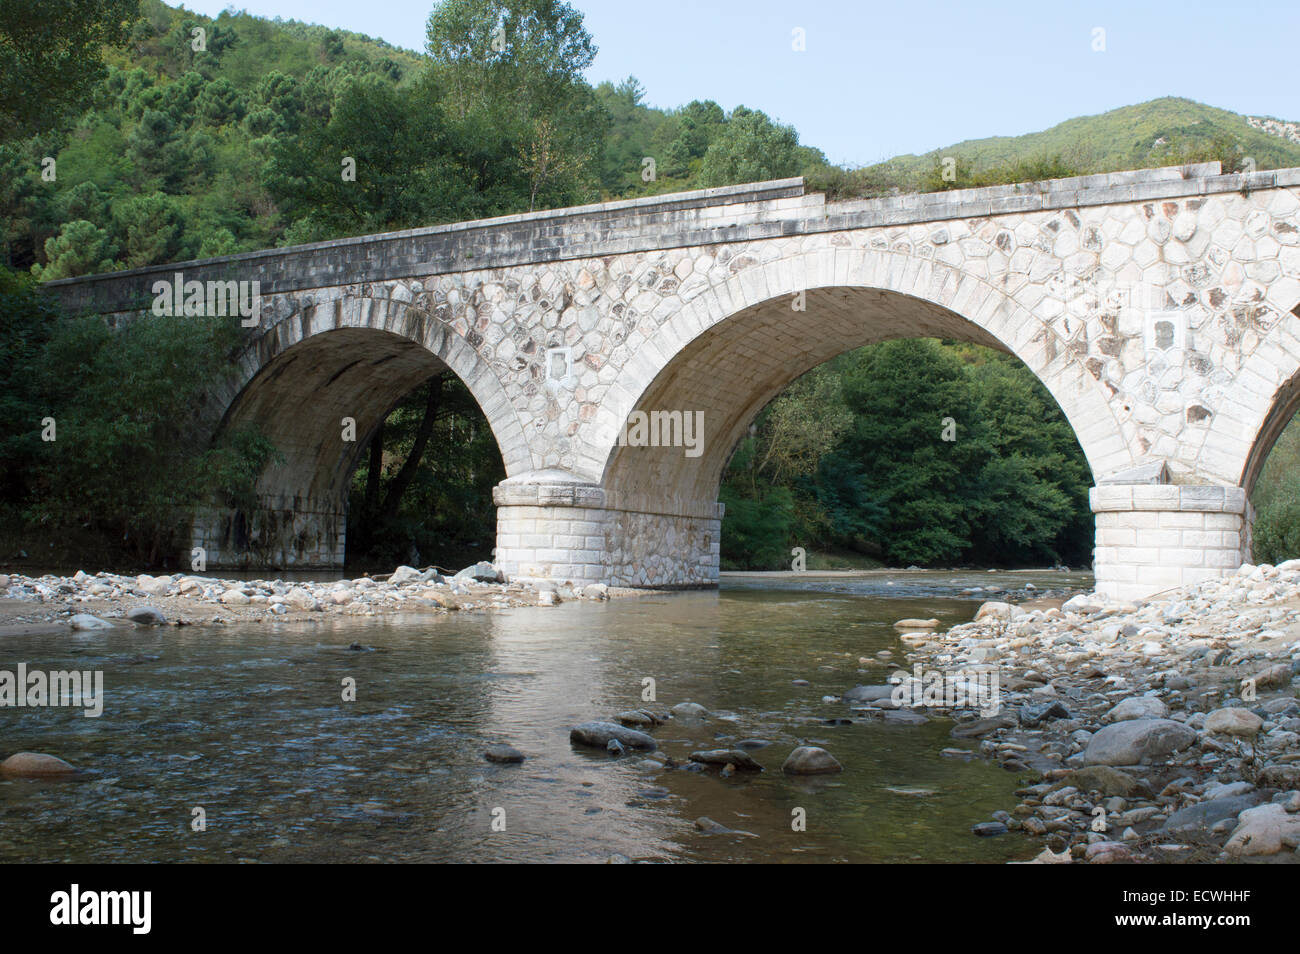 River side stone bridge Stock Photo